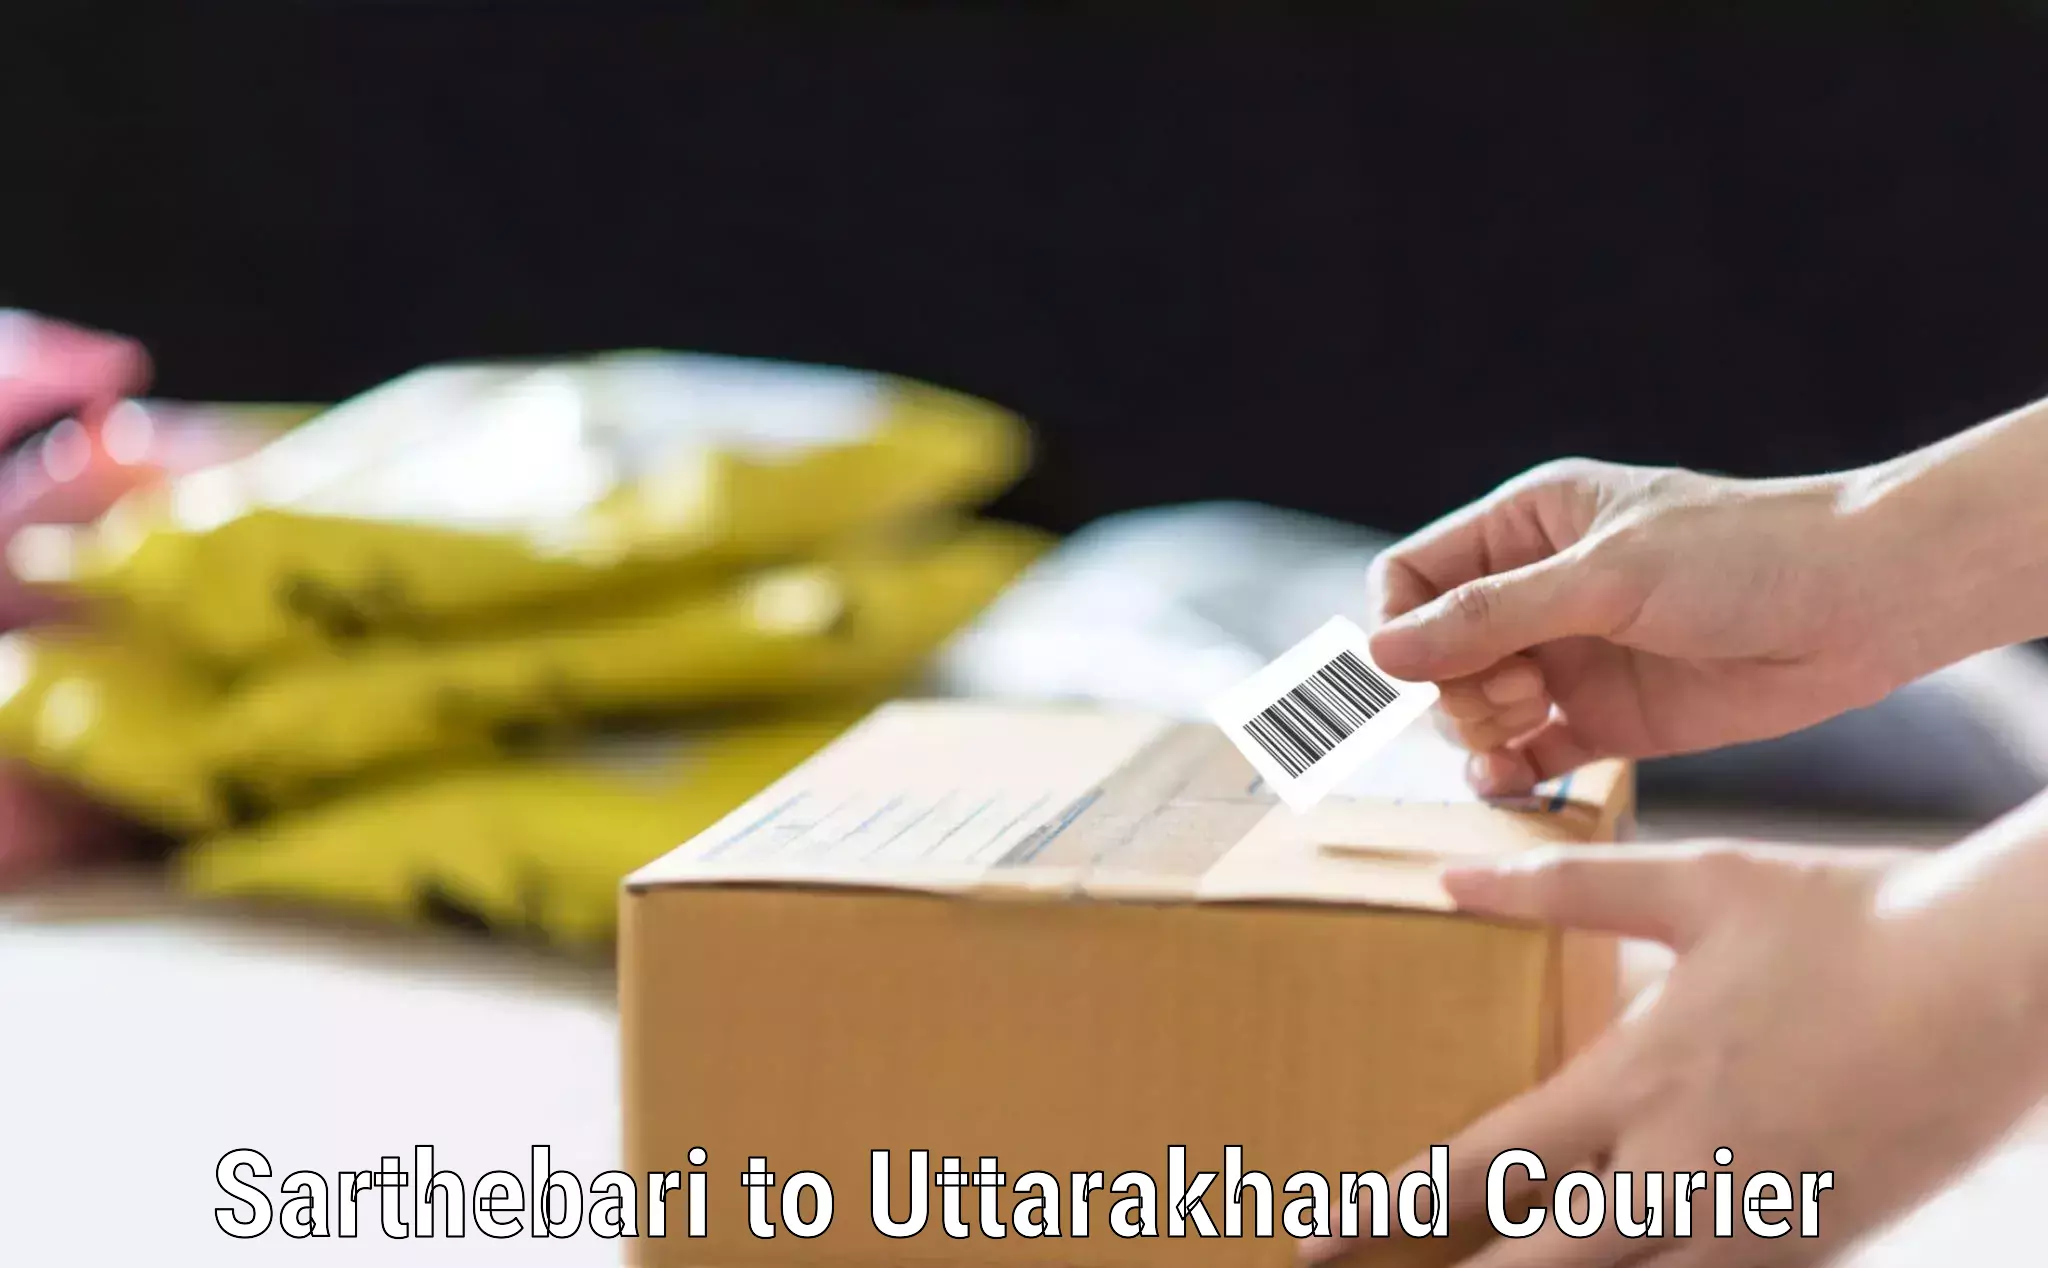 Baggage relocation service Sarthebari to Uttarakhand